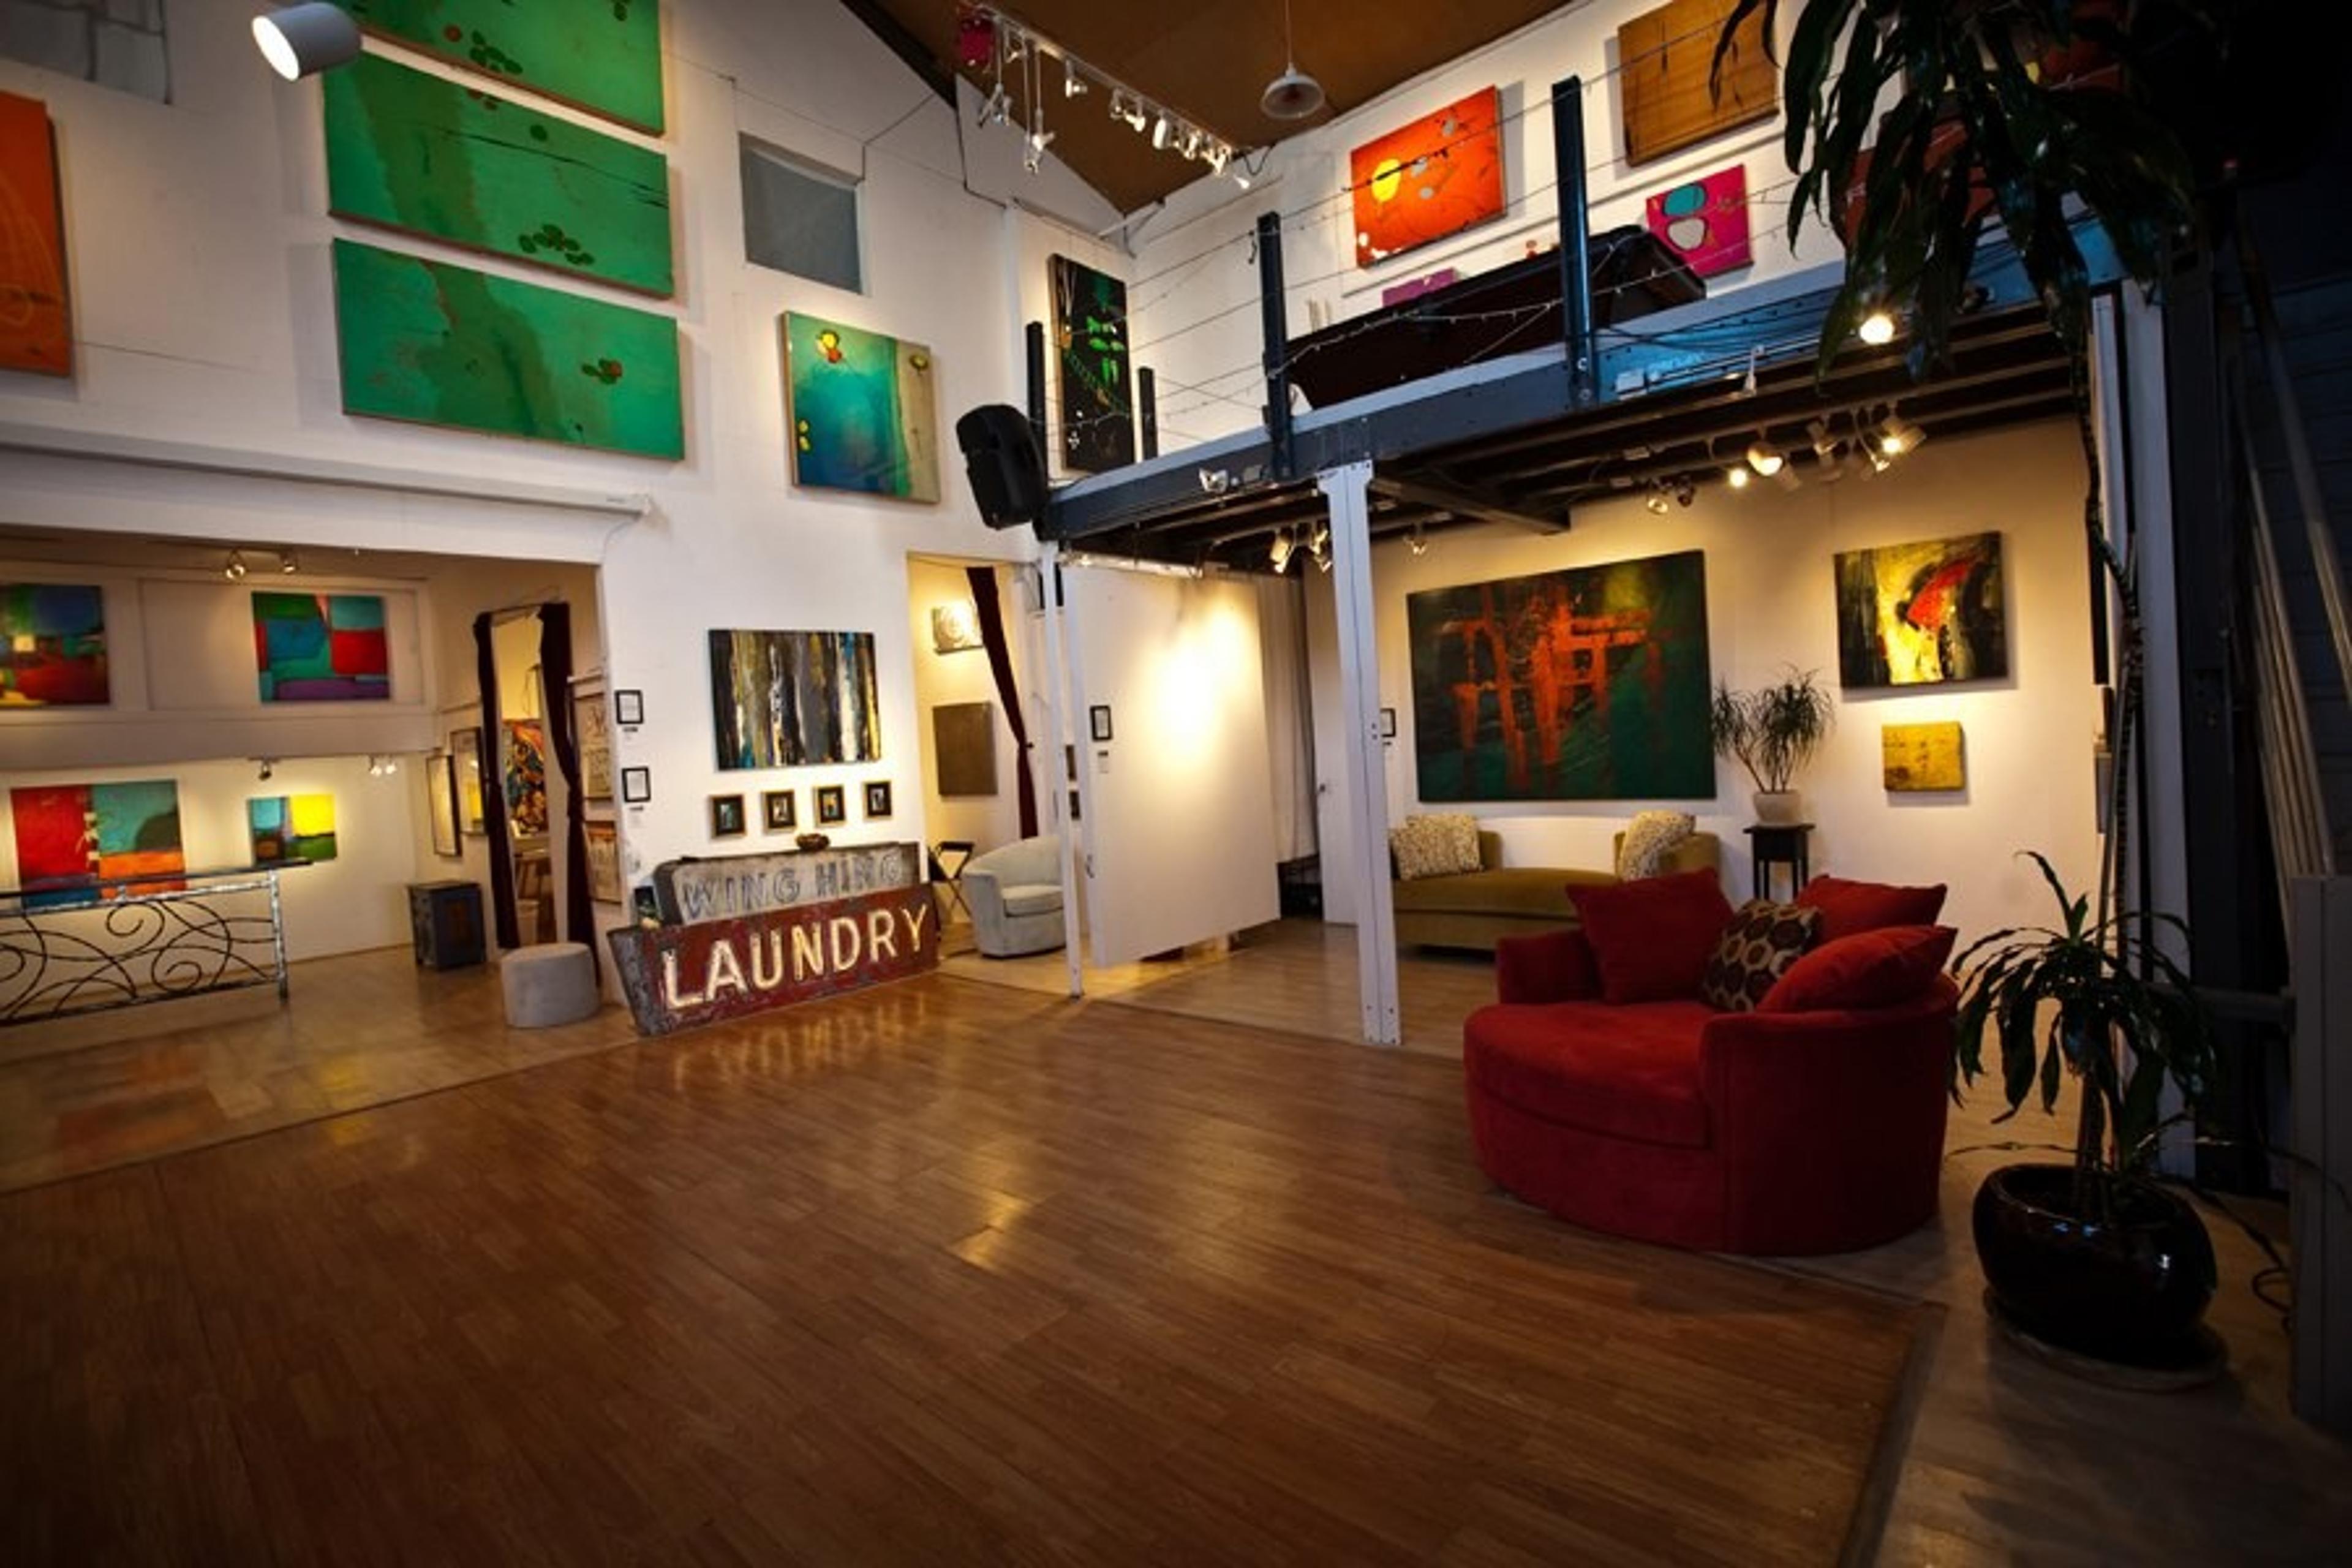 Studio 333 - Museum / Gallery in Sausalito, CA | The Vendry